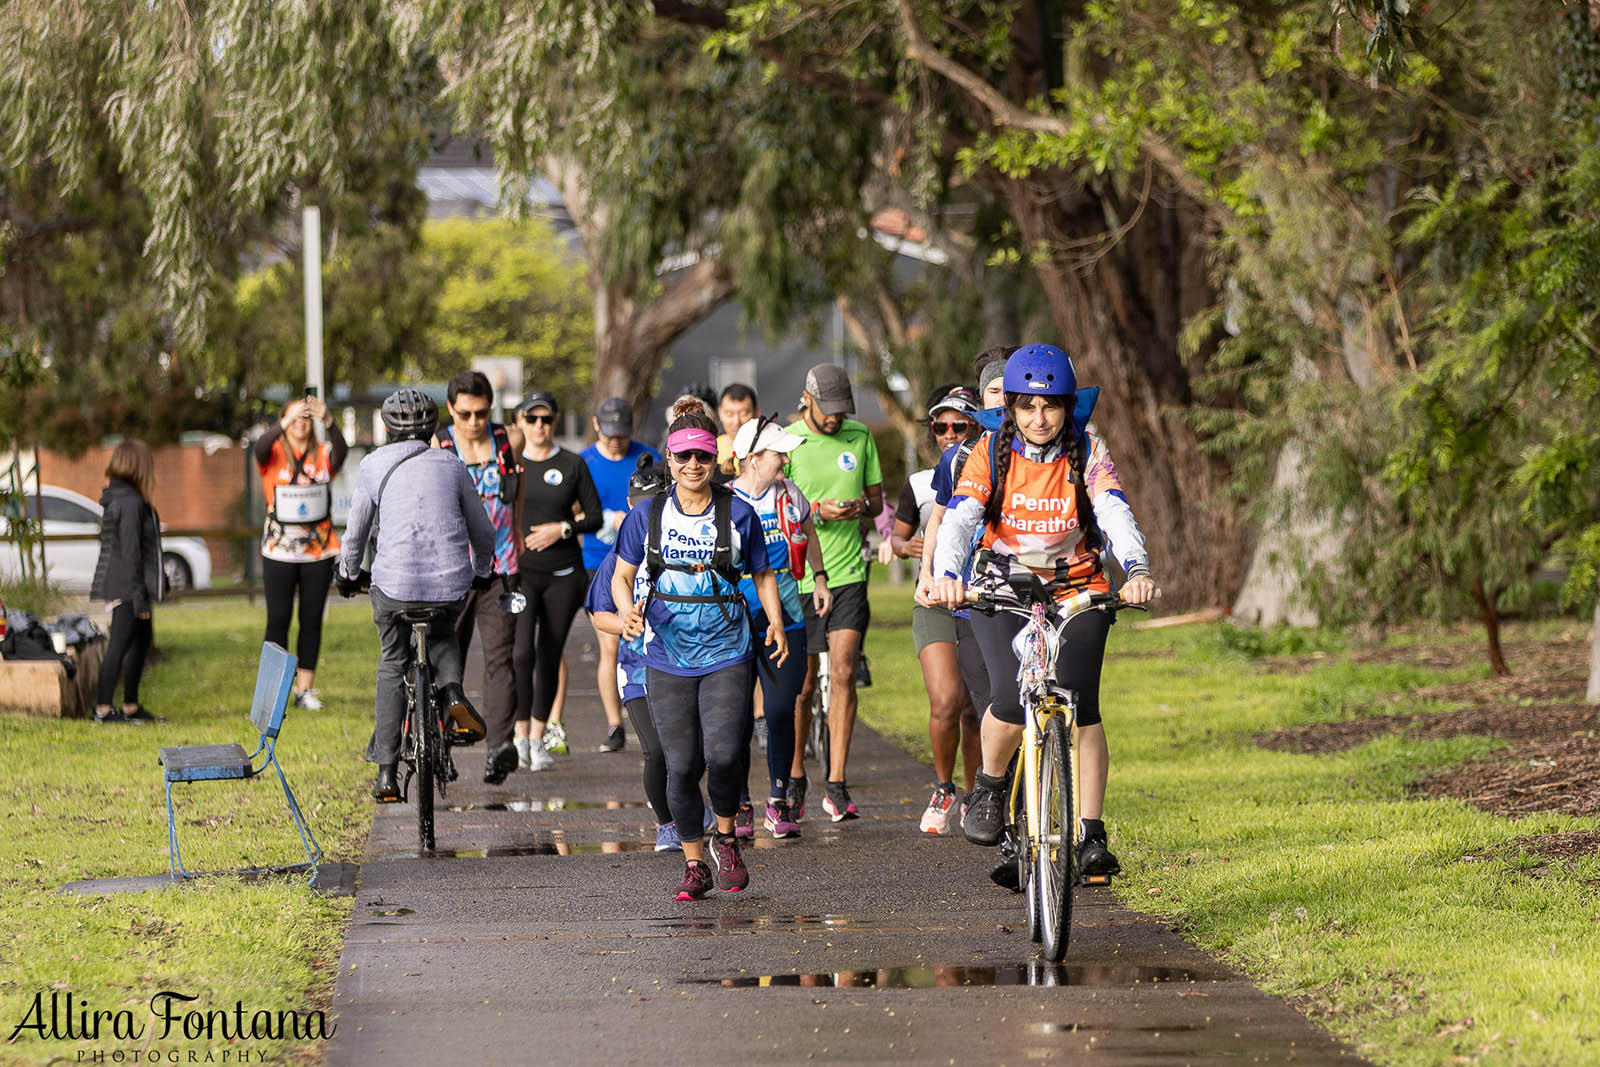 The Sydney Penny Marathon 2022 